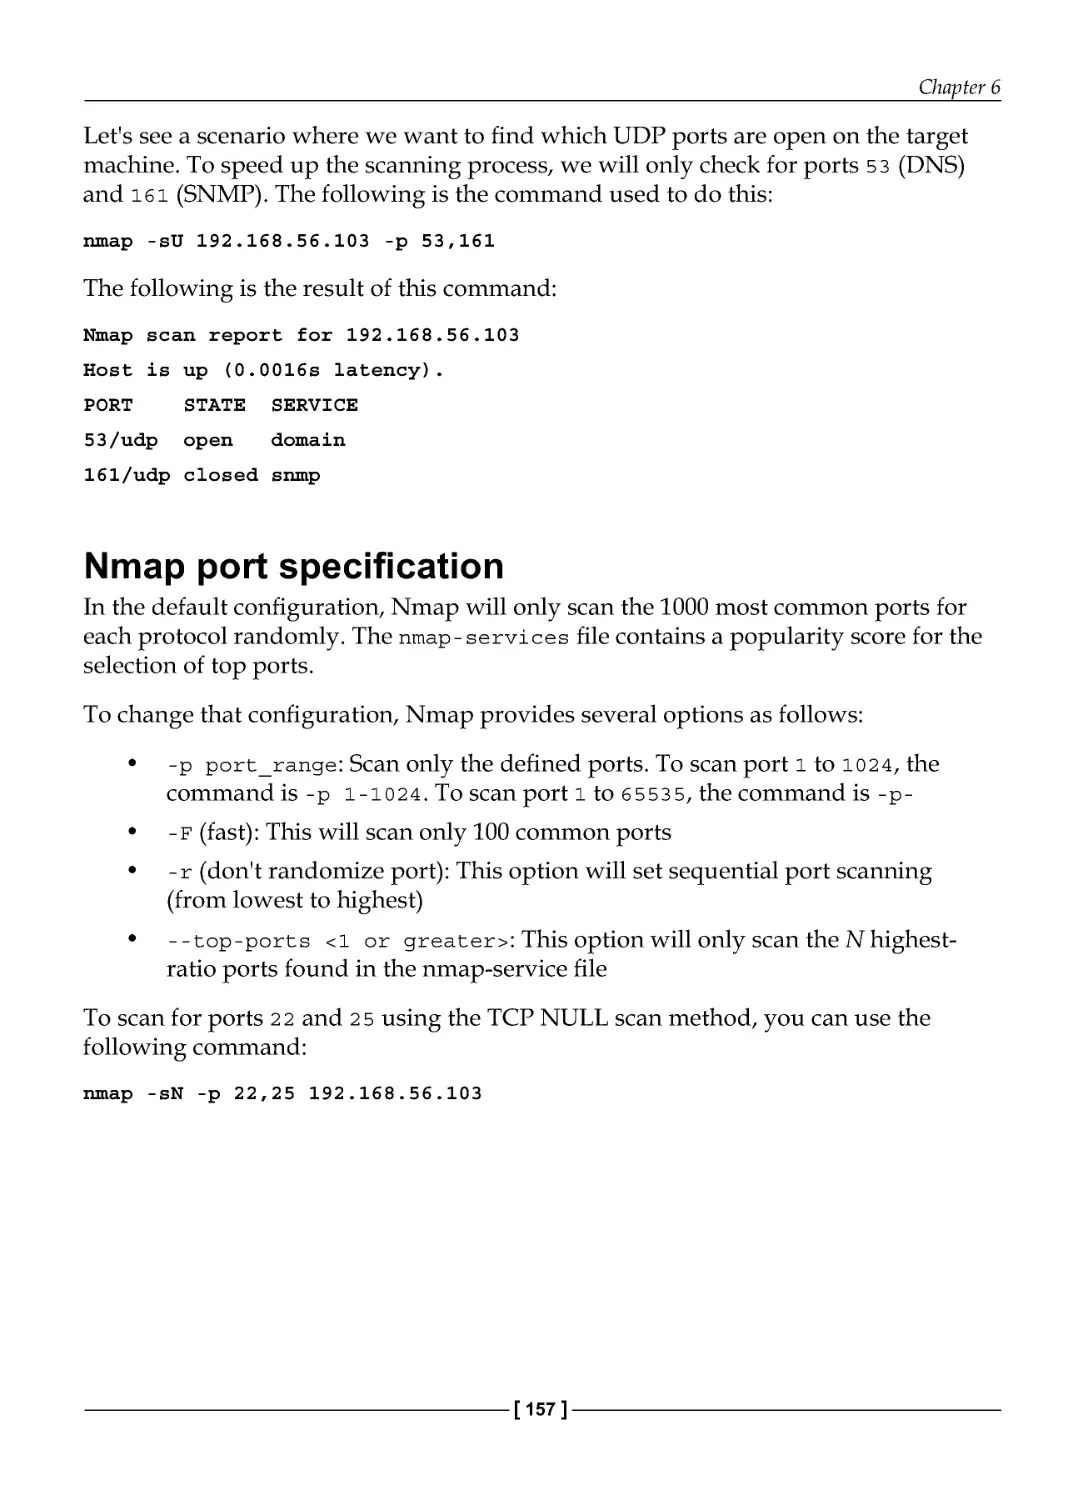 Nmap port specification